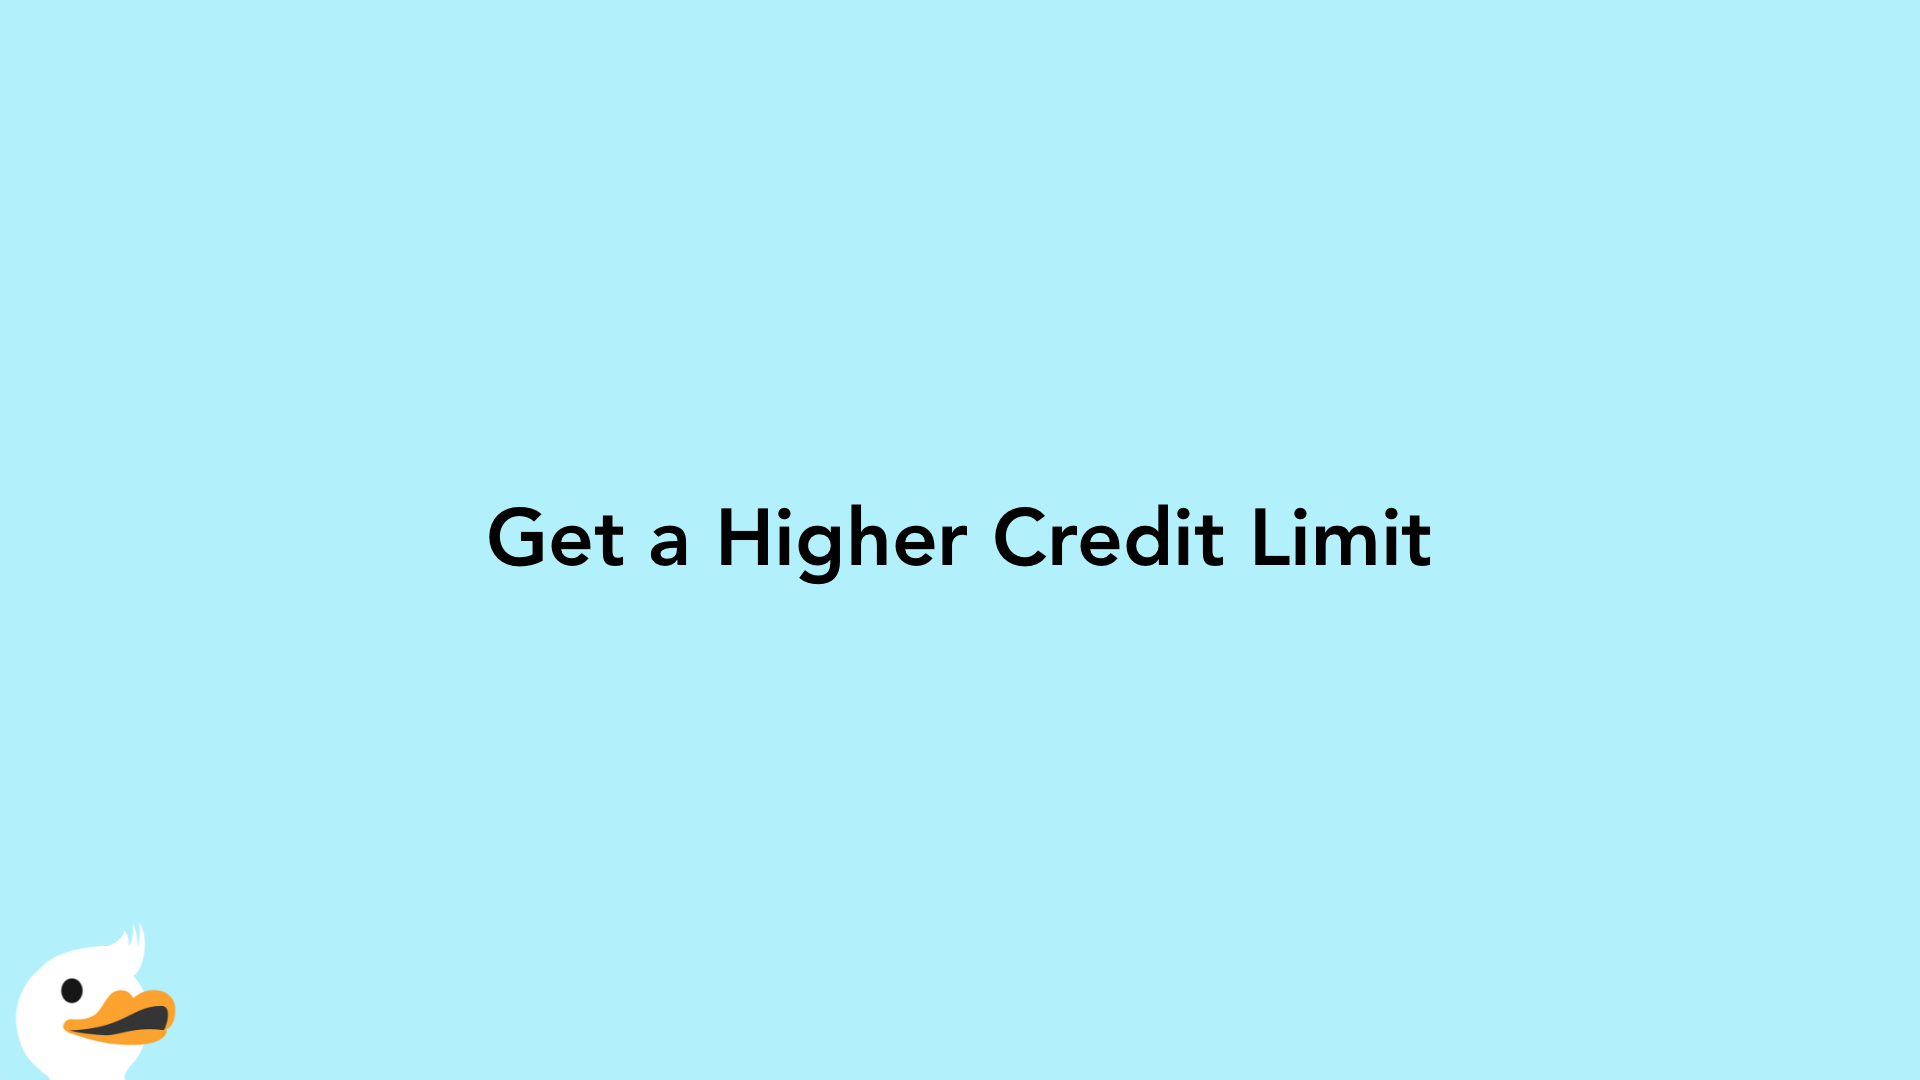 Get a Higher Credit Limit